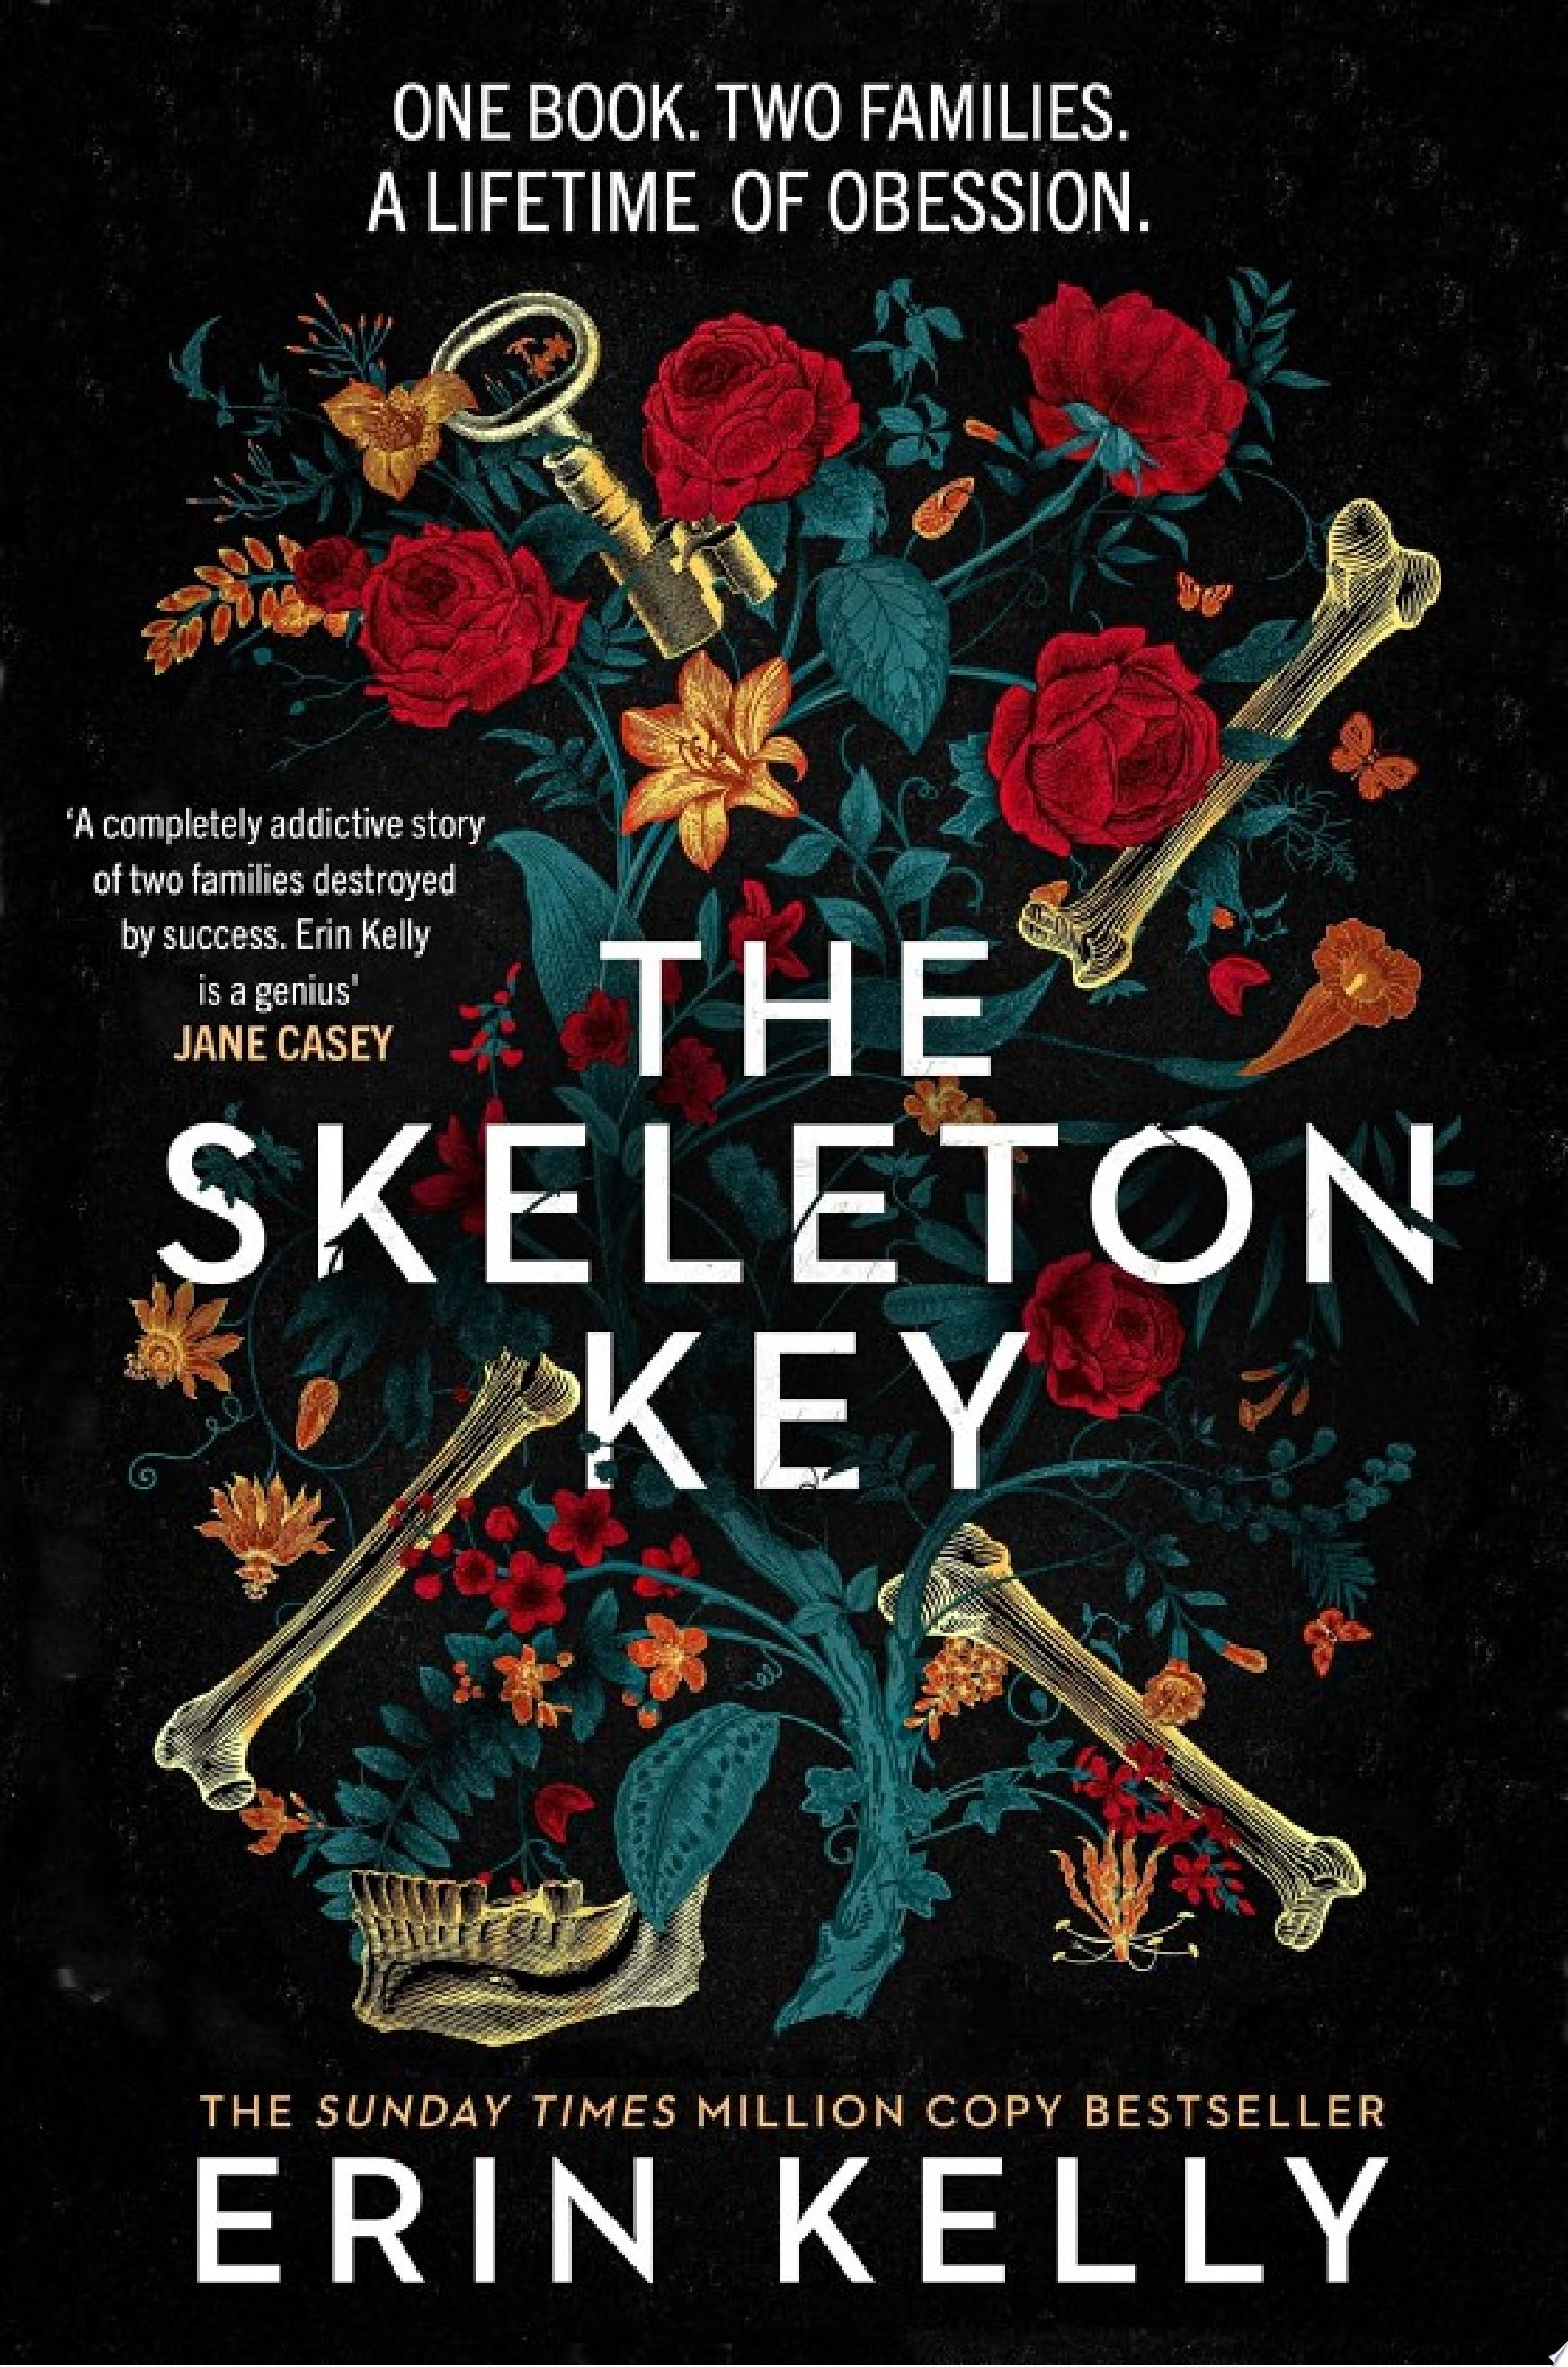 Image for "The Skeleton Key"